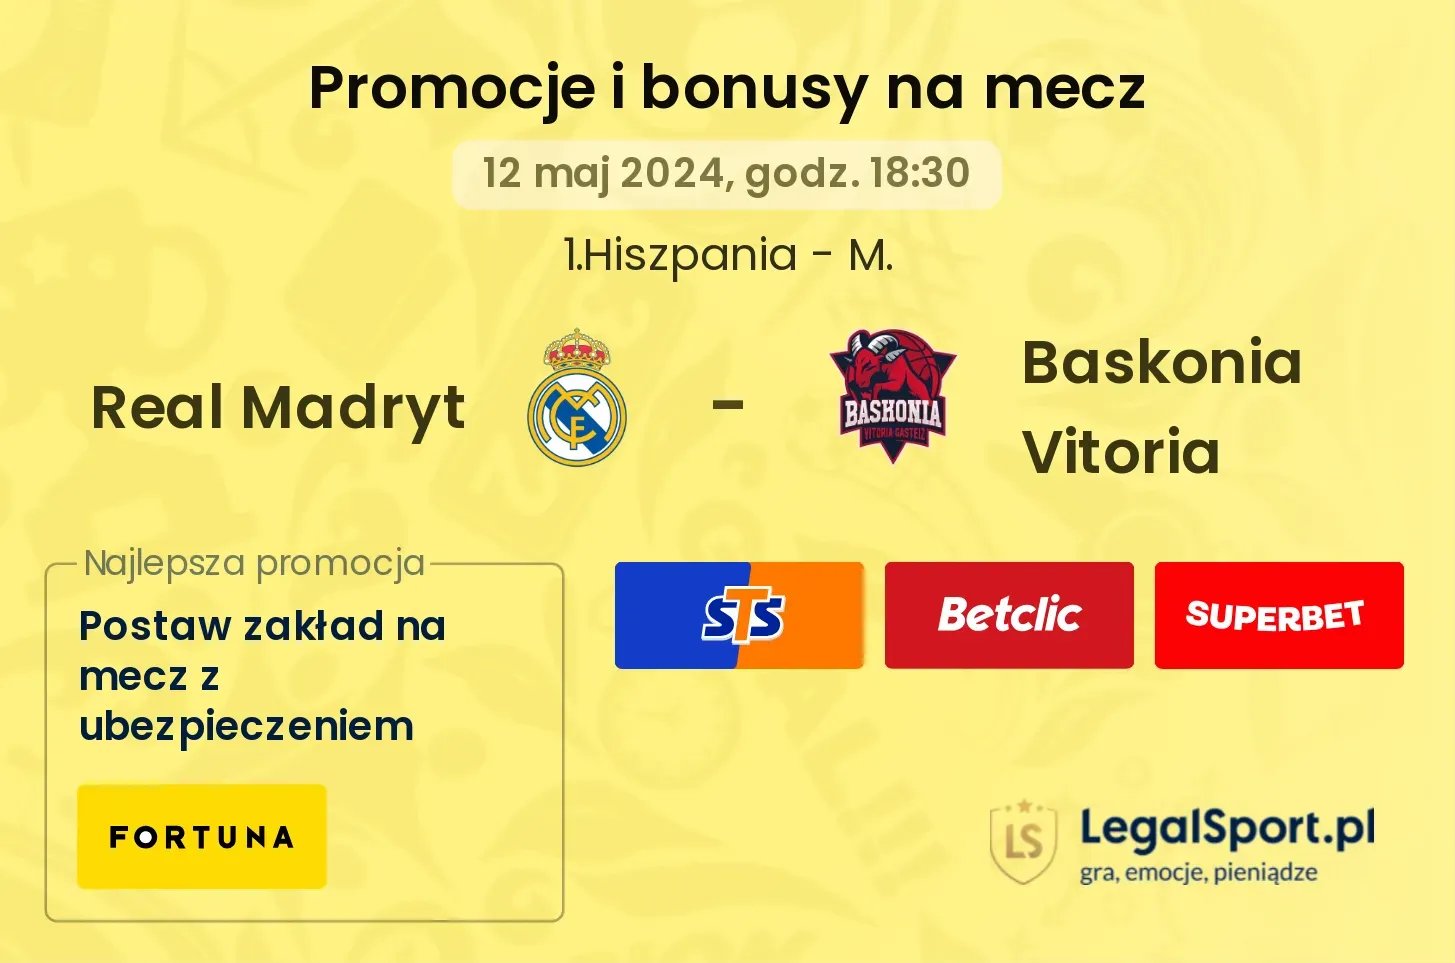 Real Madryt - Baskonia Vitoria bonusy i promocje (12.05, 18:30)